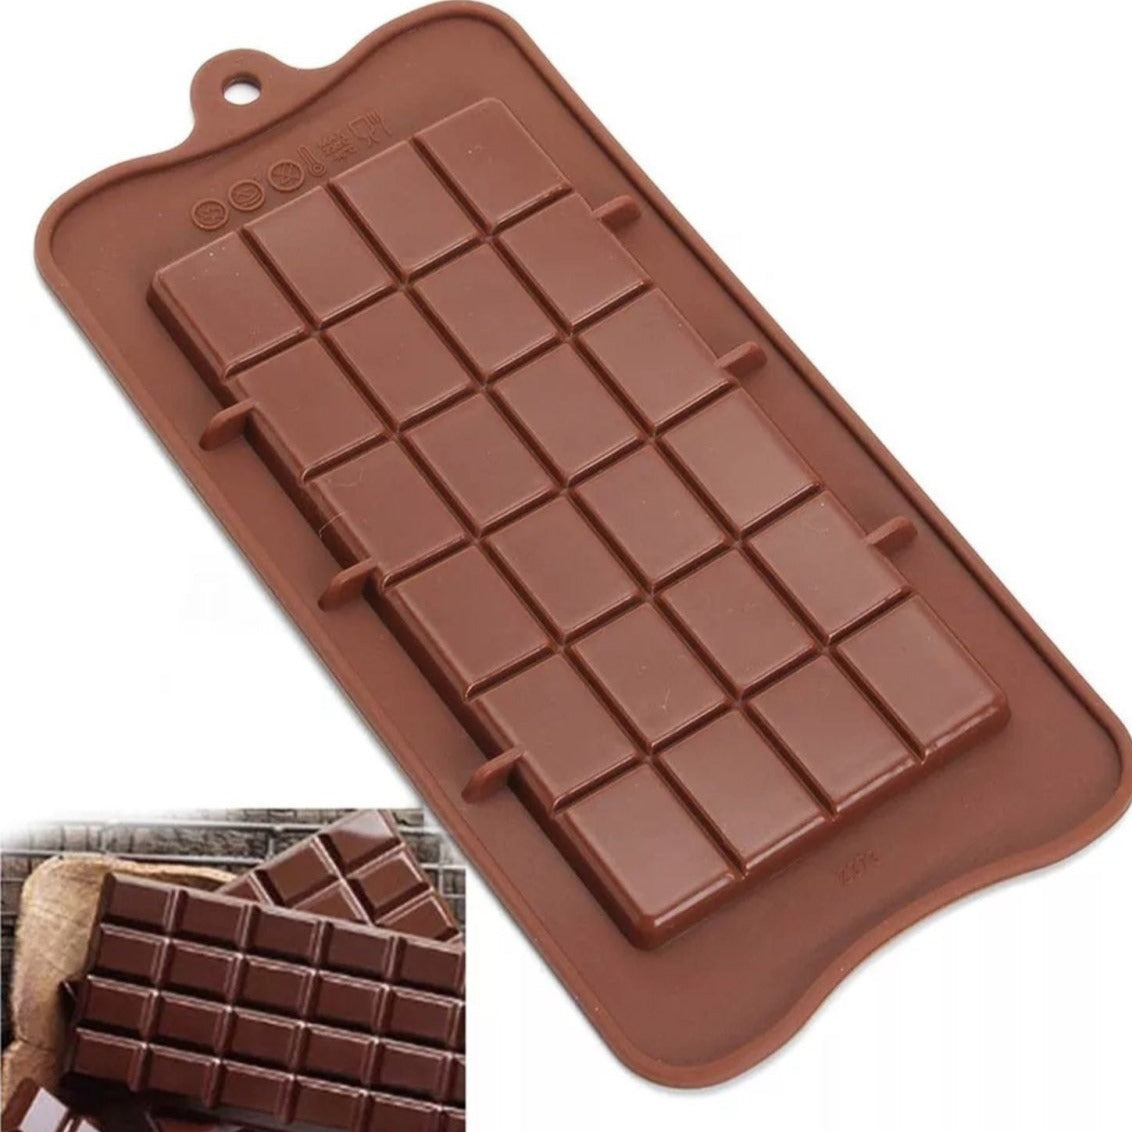 Big bar chocolate silicone mould - Bakewareindia